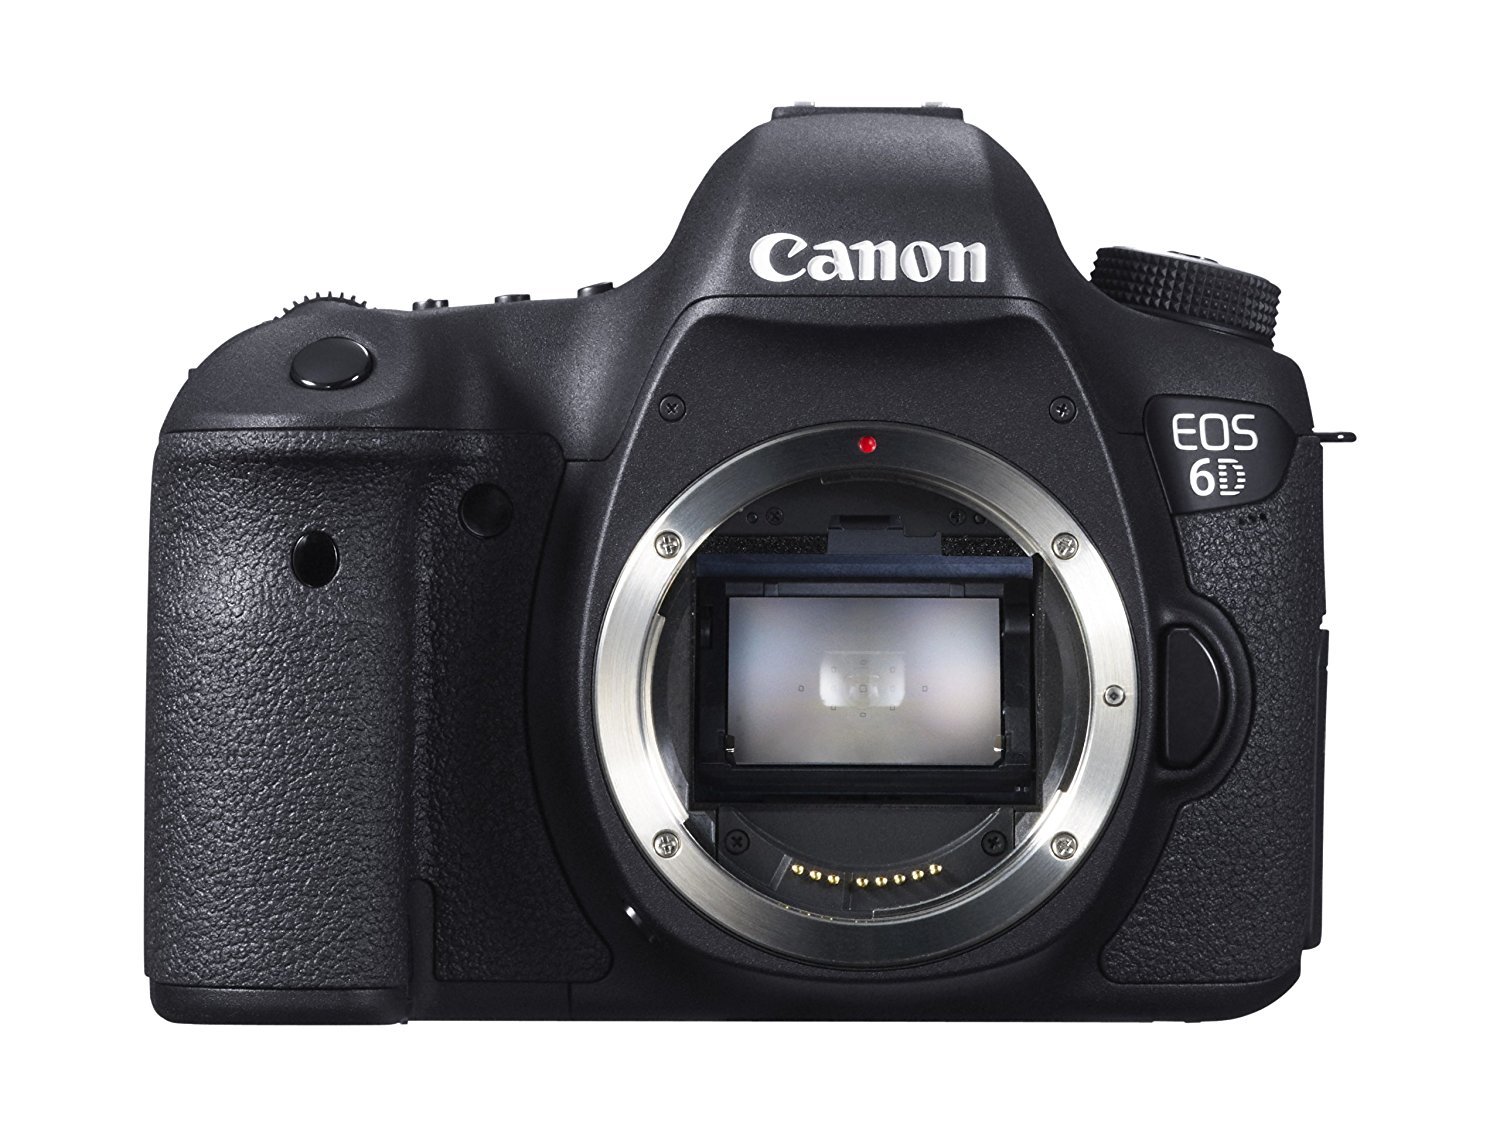 Canon كاميرا EOS 6D بدقة 20.2 ميجابكسل CMOS SLR رقمية مع شاشة LCD مقاس 3.0 بوصة (الهيكل فقط) - تدعم Wi-Fi